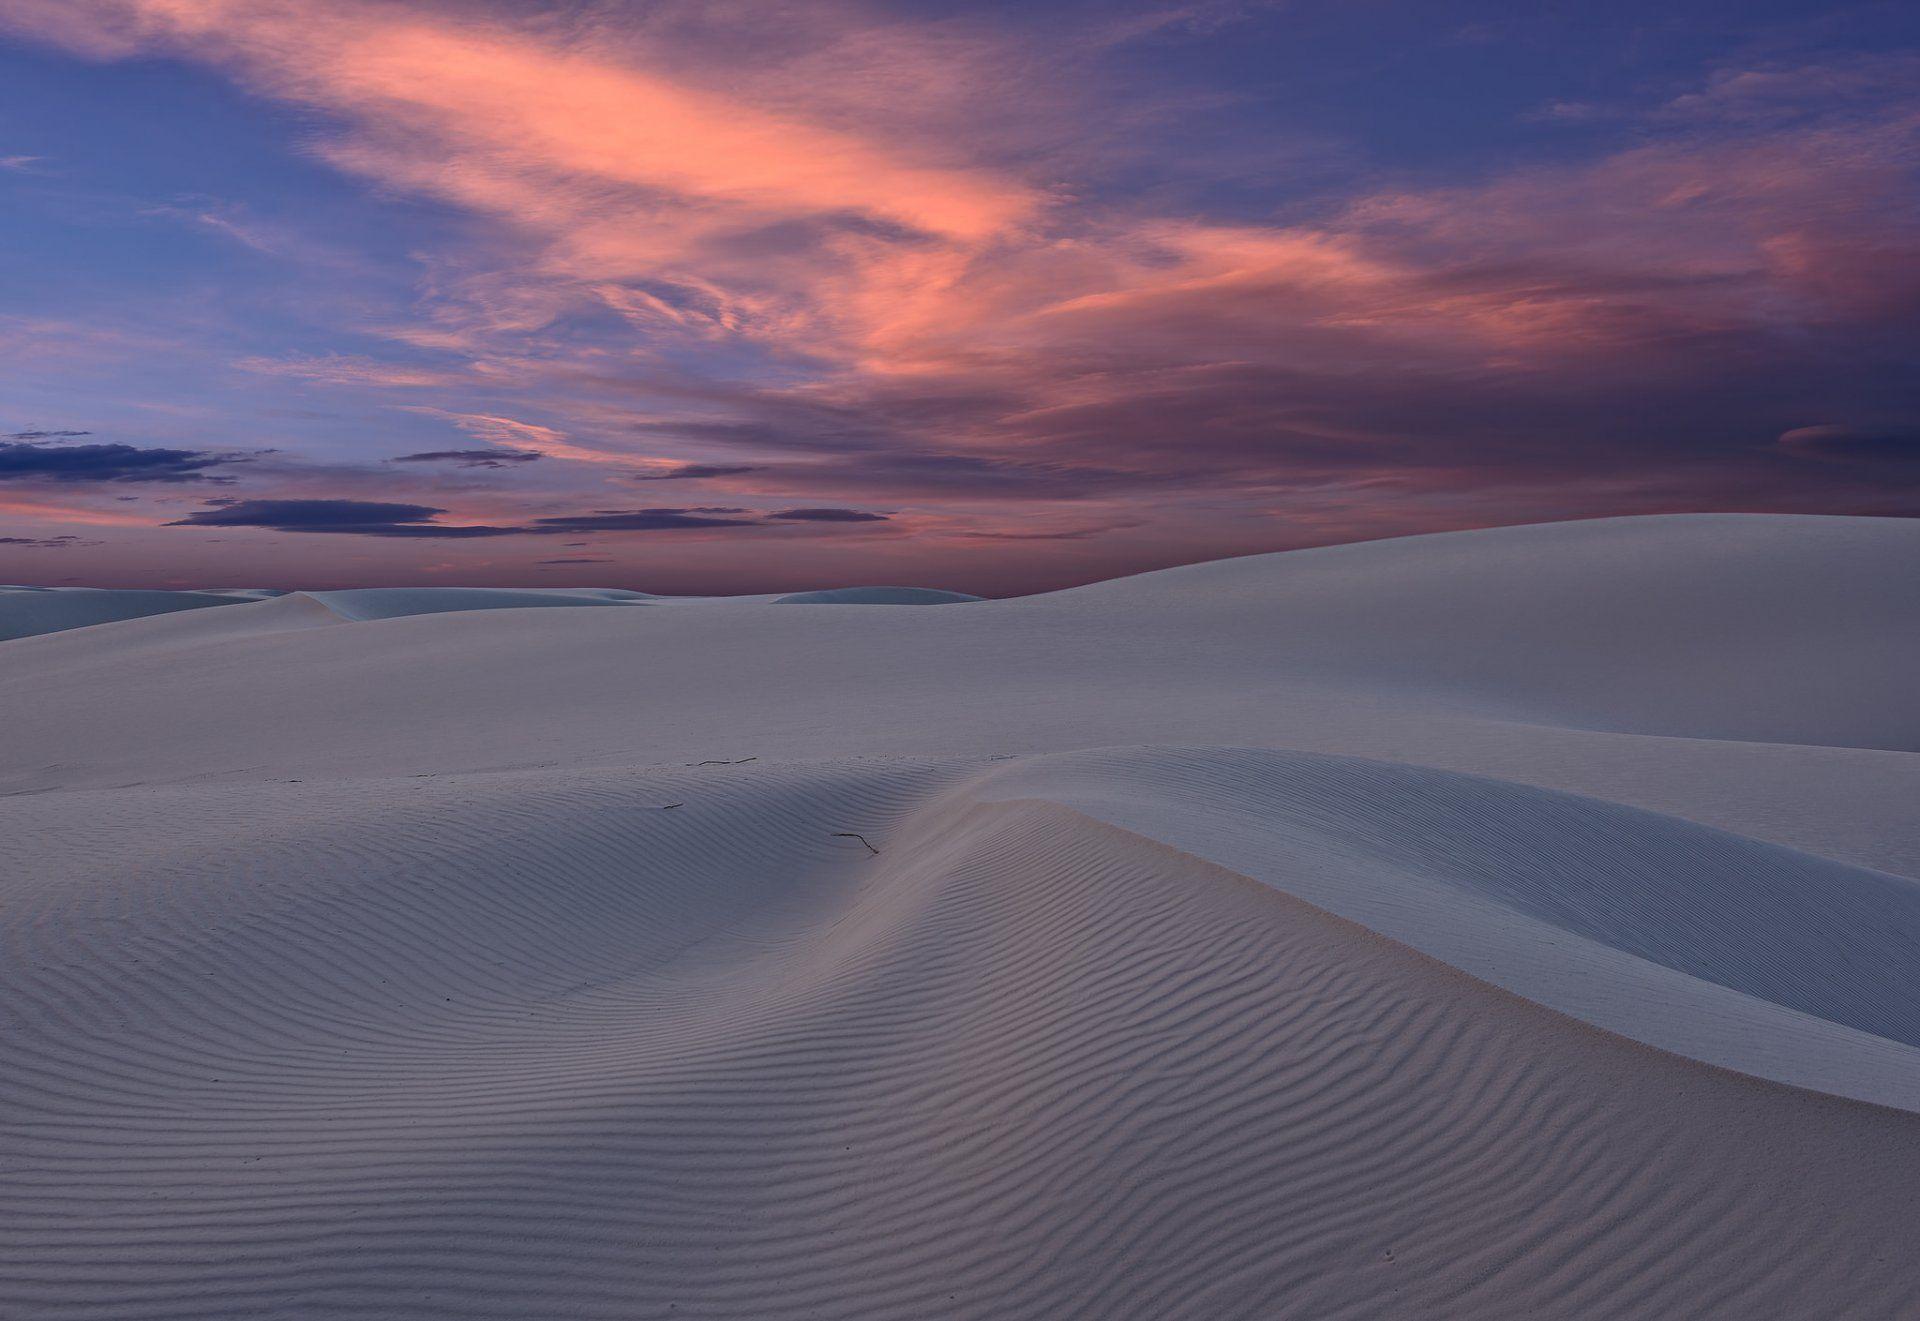 Desert sand dune sunset new mexico united states 2K wallpapers